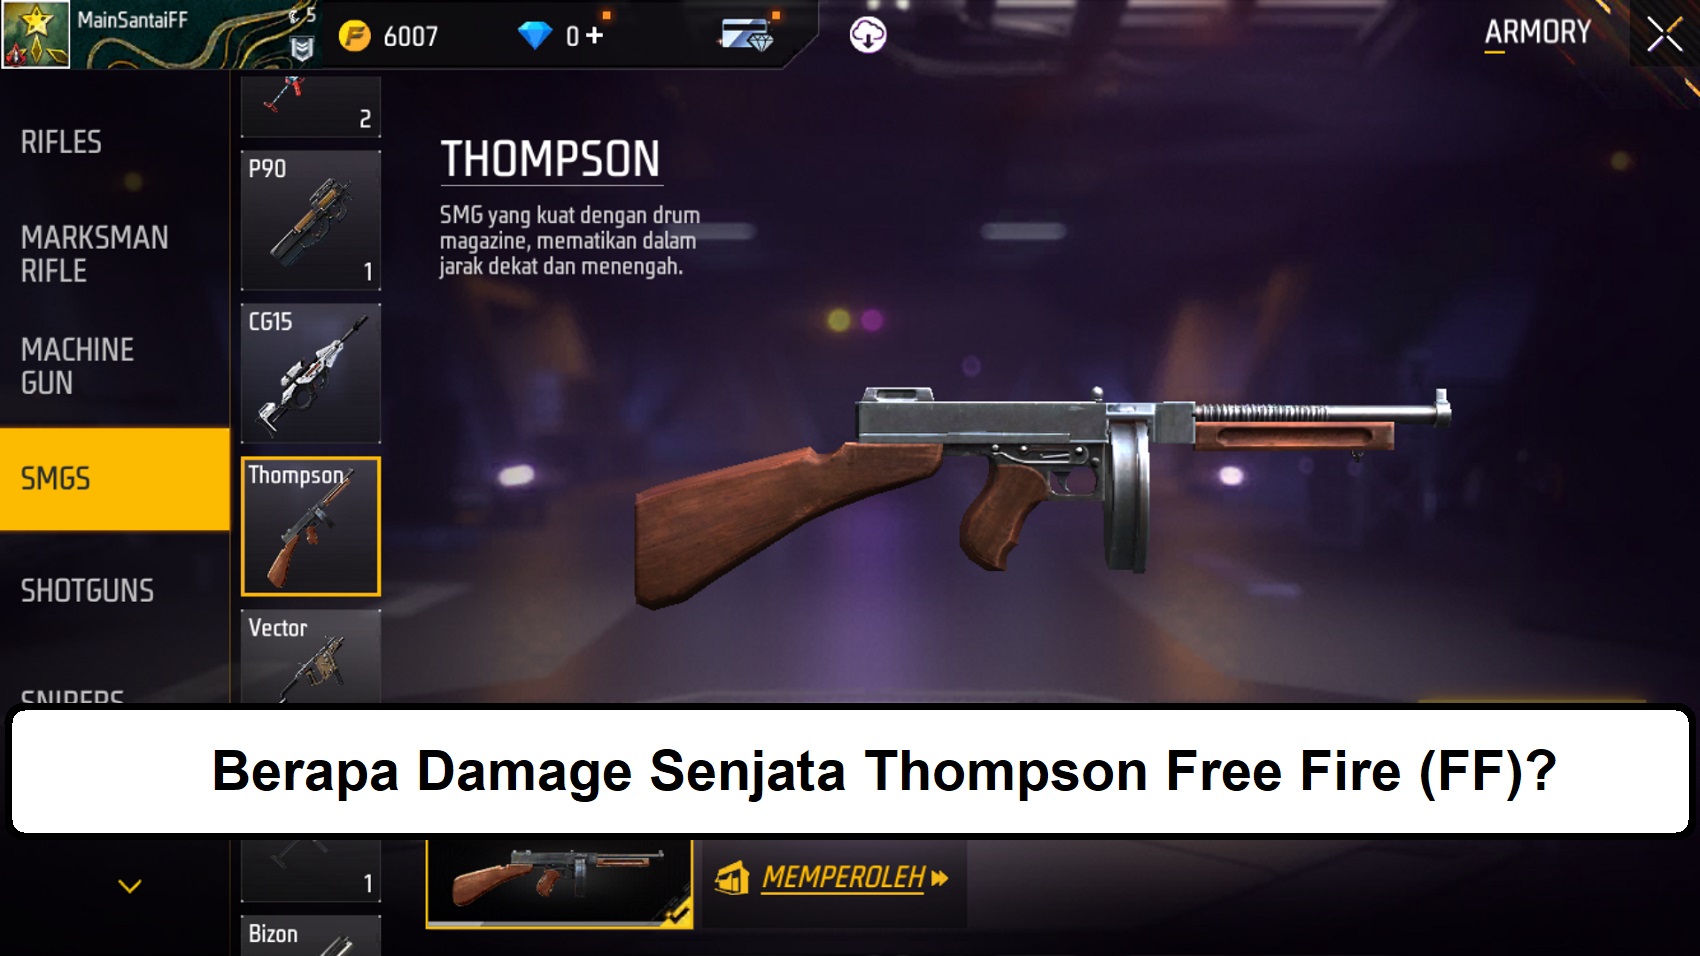 Berapa Damage Senjata Thompson Free Fire (FF)?